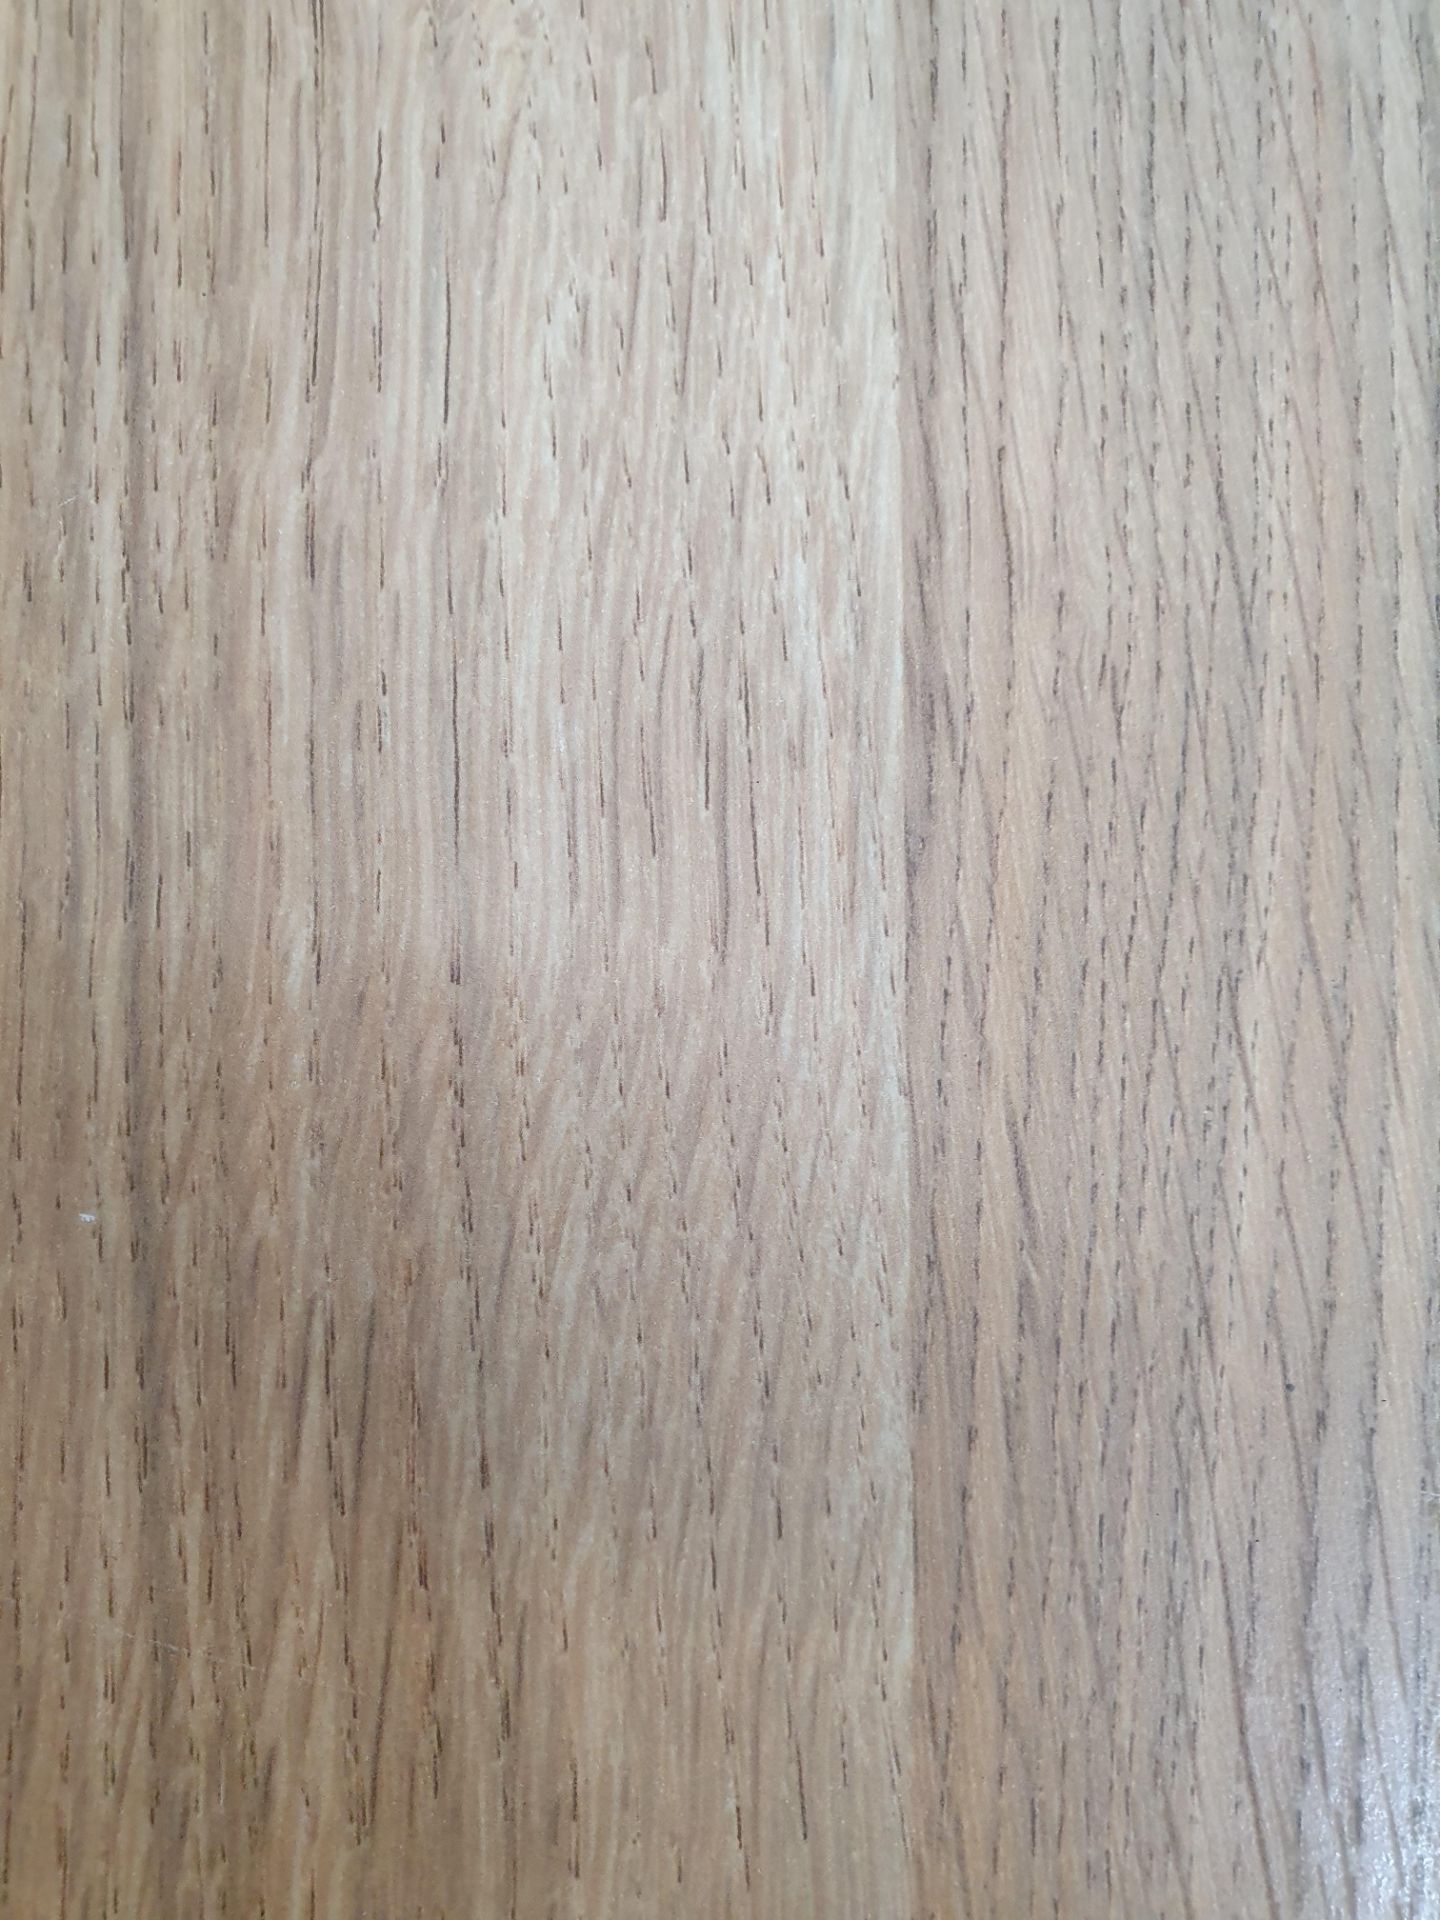 Wooden Coffee Table | 52cm x 52cm x 46cm - Image 2 of 2